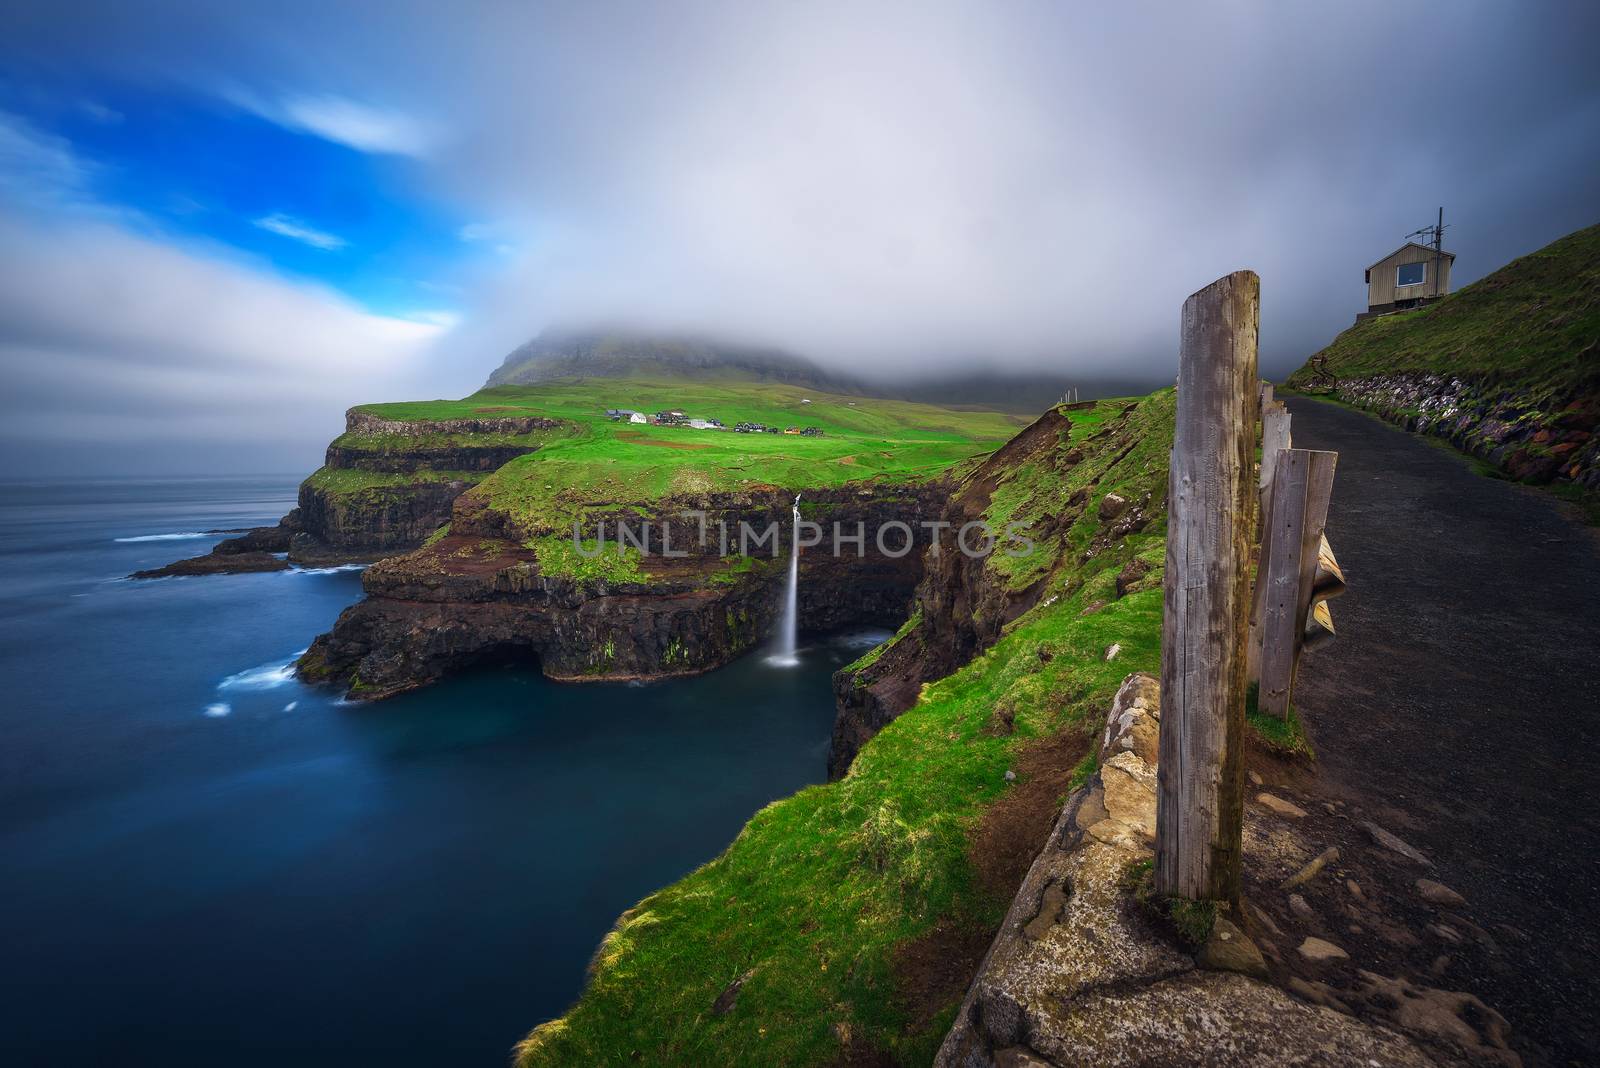 Gasadalur village and Mulafossur waterfall on Faroe Islands, Denmark by nickfox